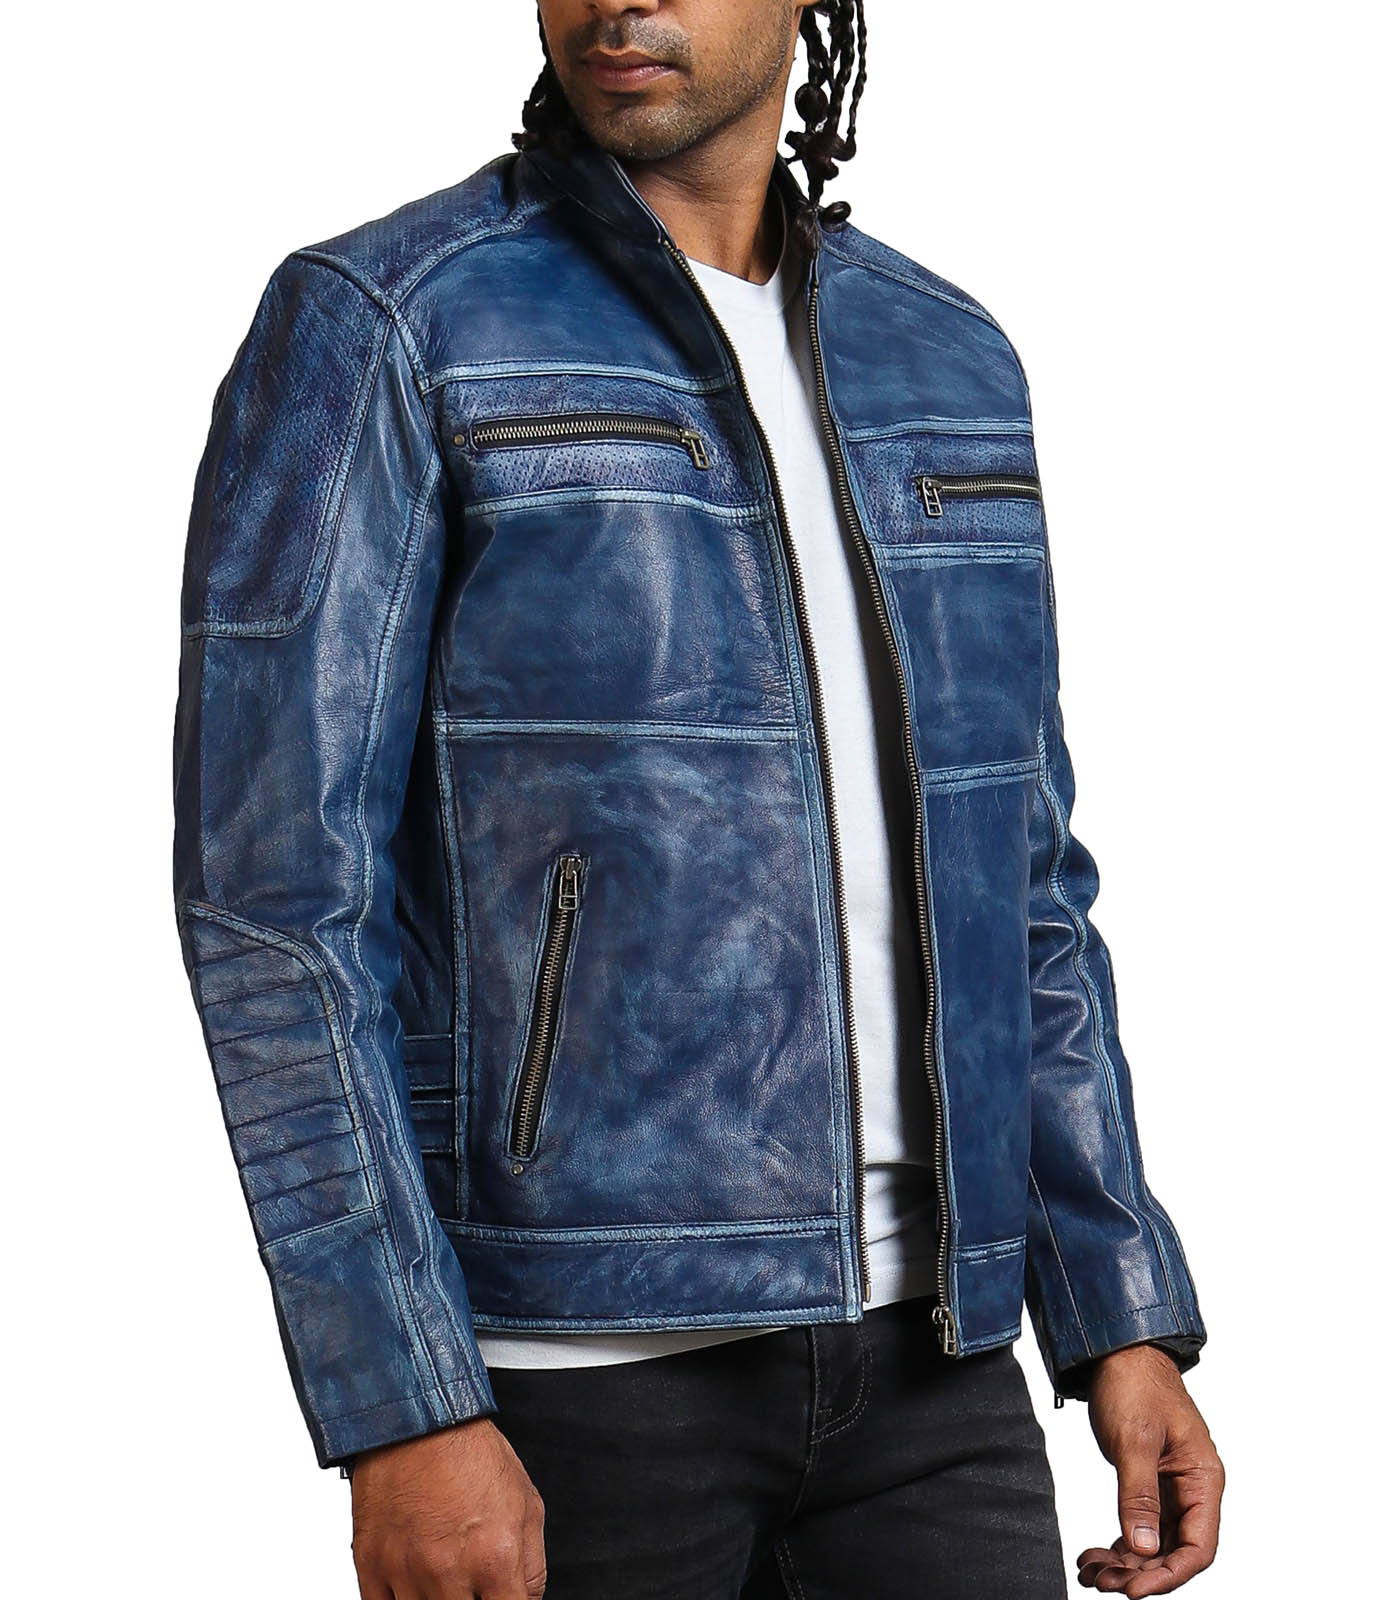 Navy Blue Leather Sport Biker Jacket - Mens Fashion in Texas